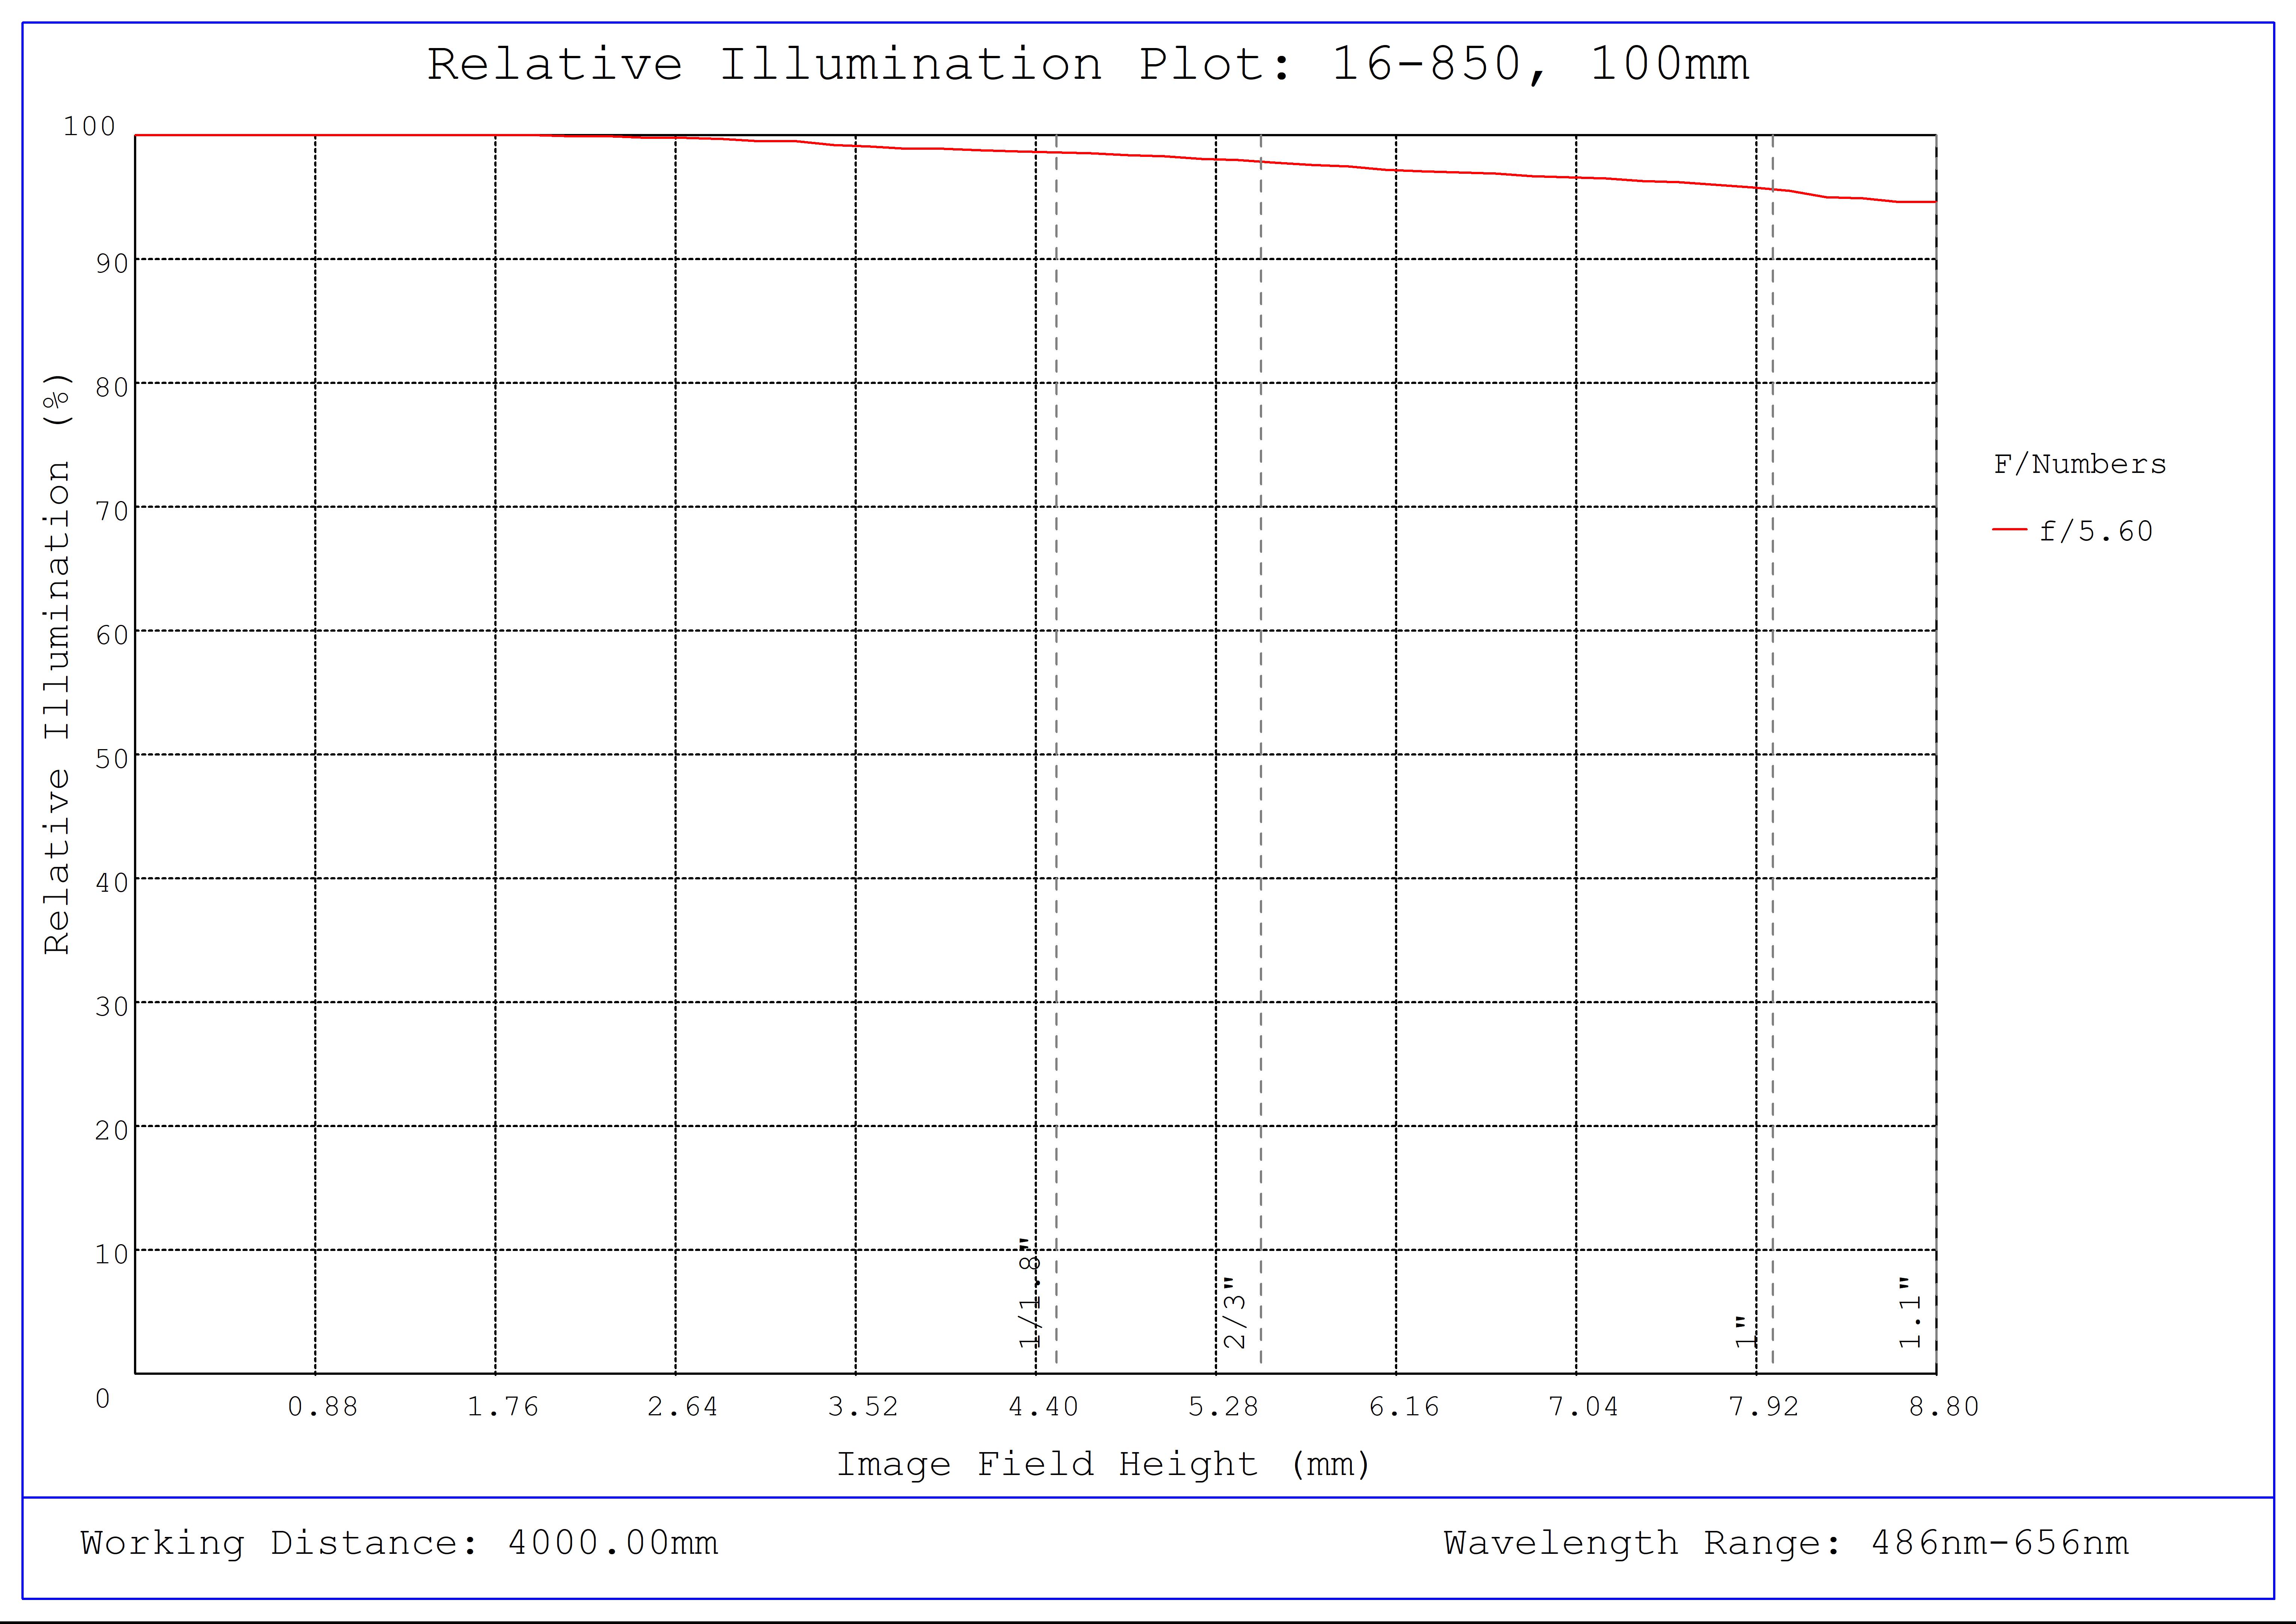 #16-850, 100mm, f/5.6 Athermal Lens, Relative Illumination Plot